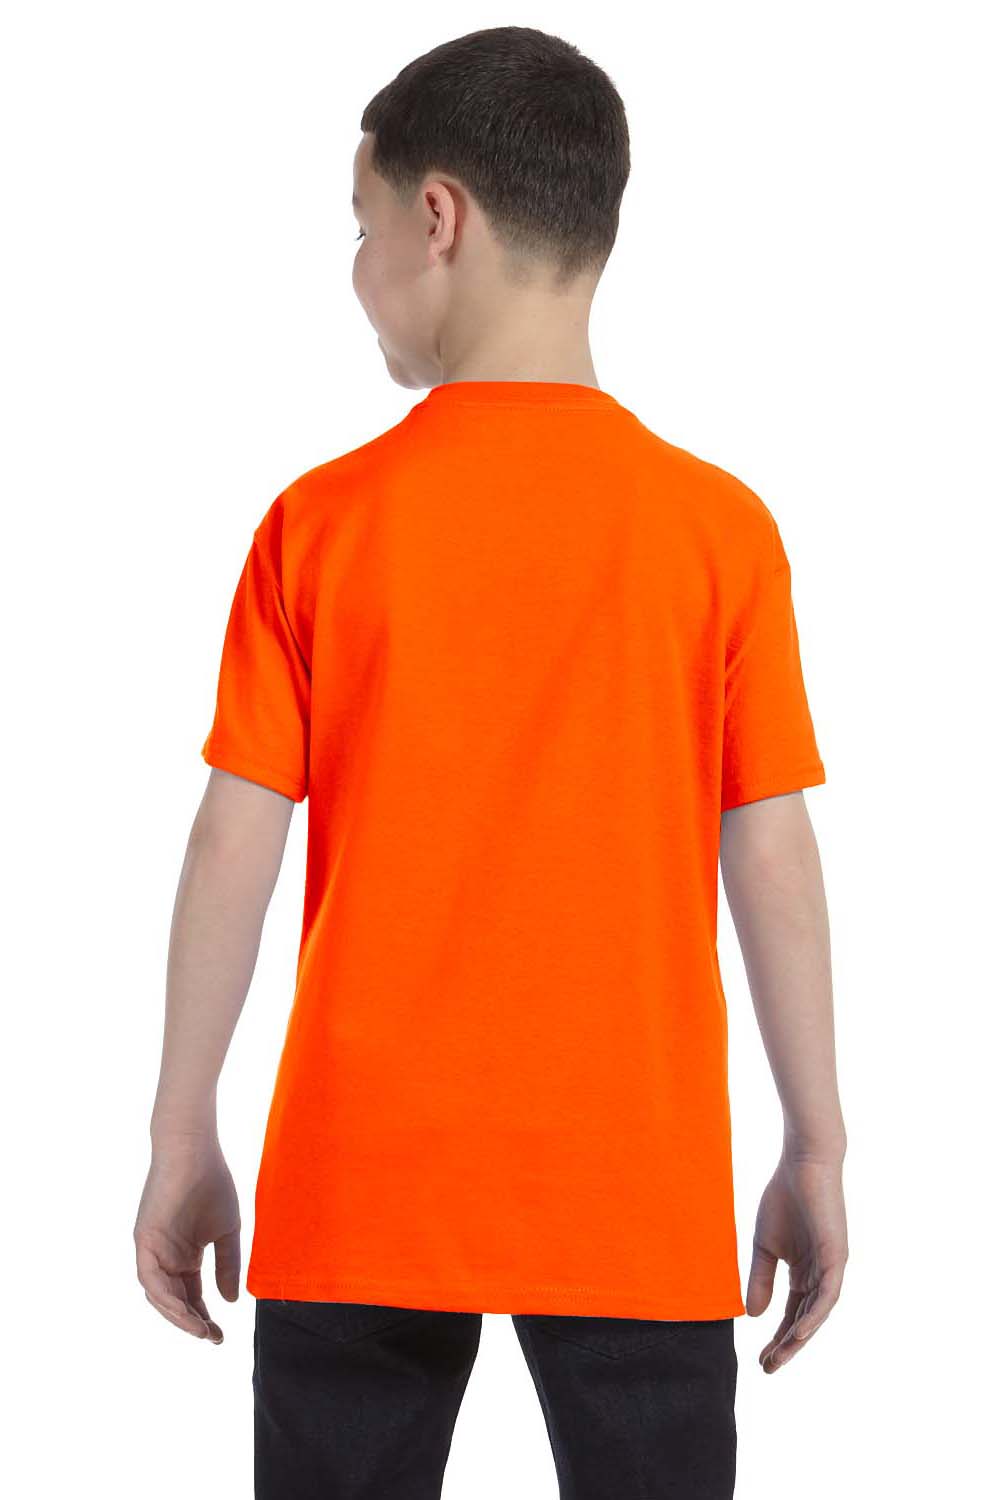 Jerzees 29B Youth Dri-Power Moisture Wicking Short Sleeve Crewneck T-Shirt Safety Orange Back